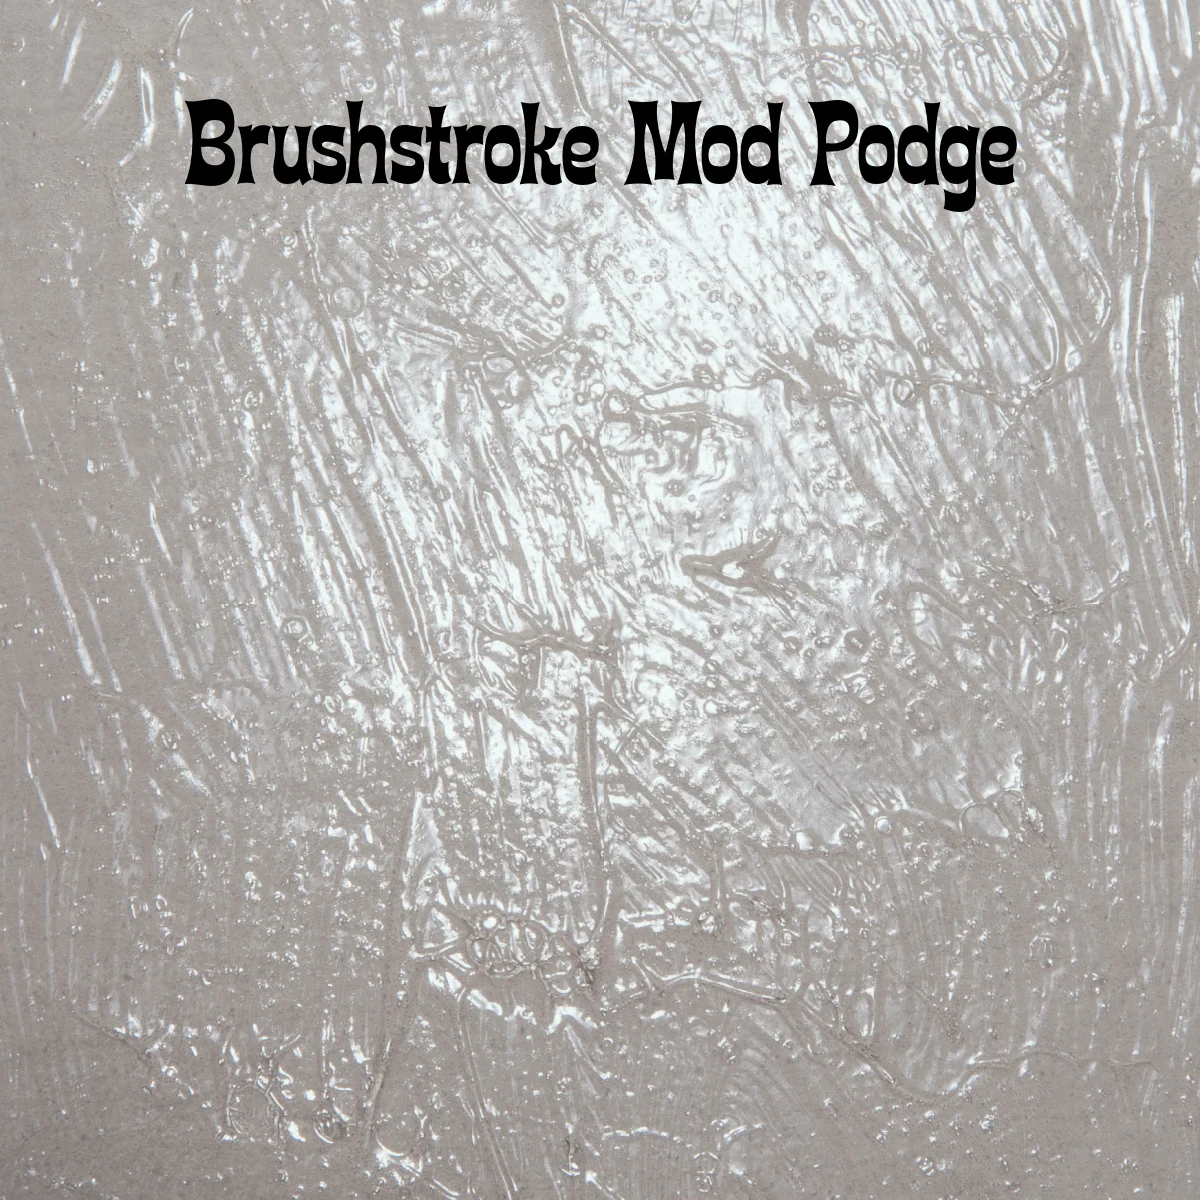 Brushstroke Mod Podge swatch